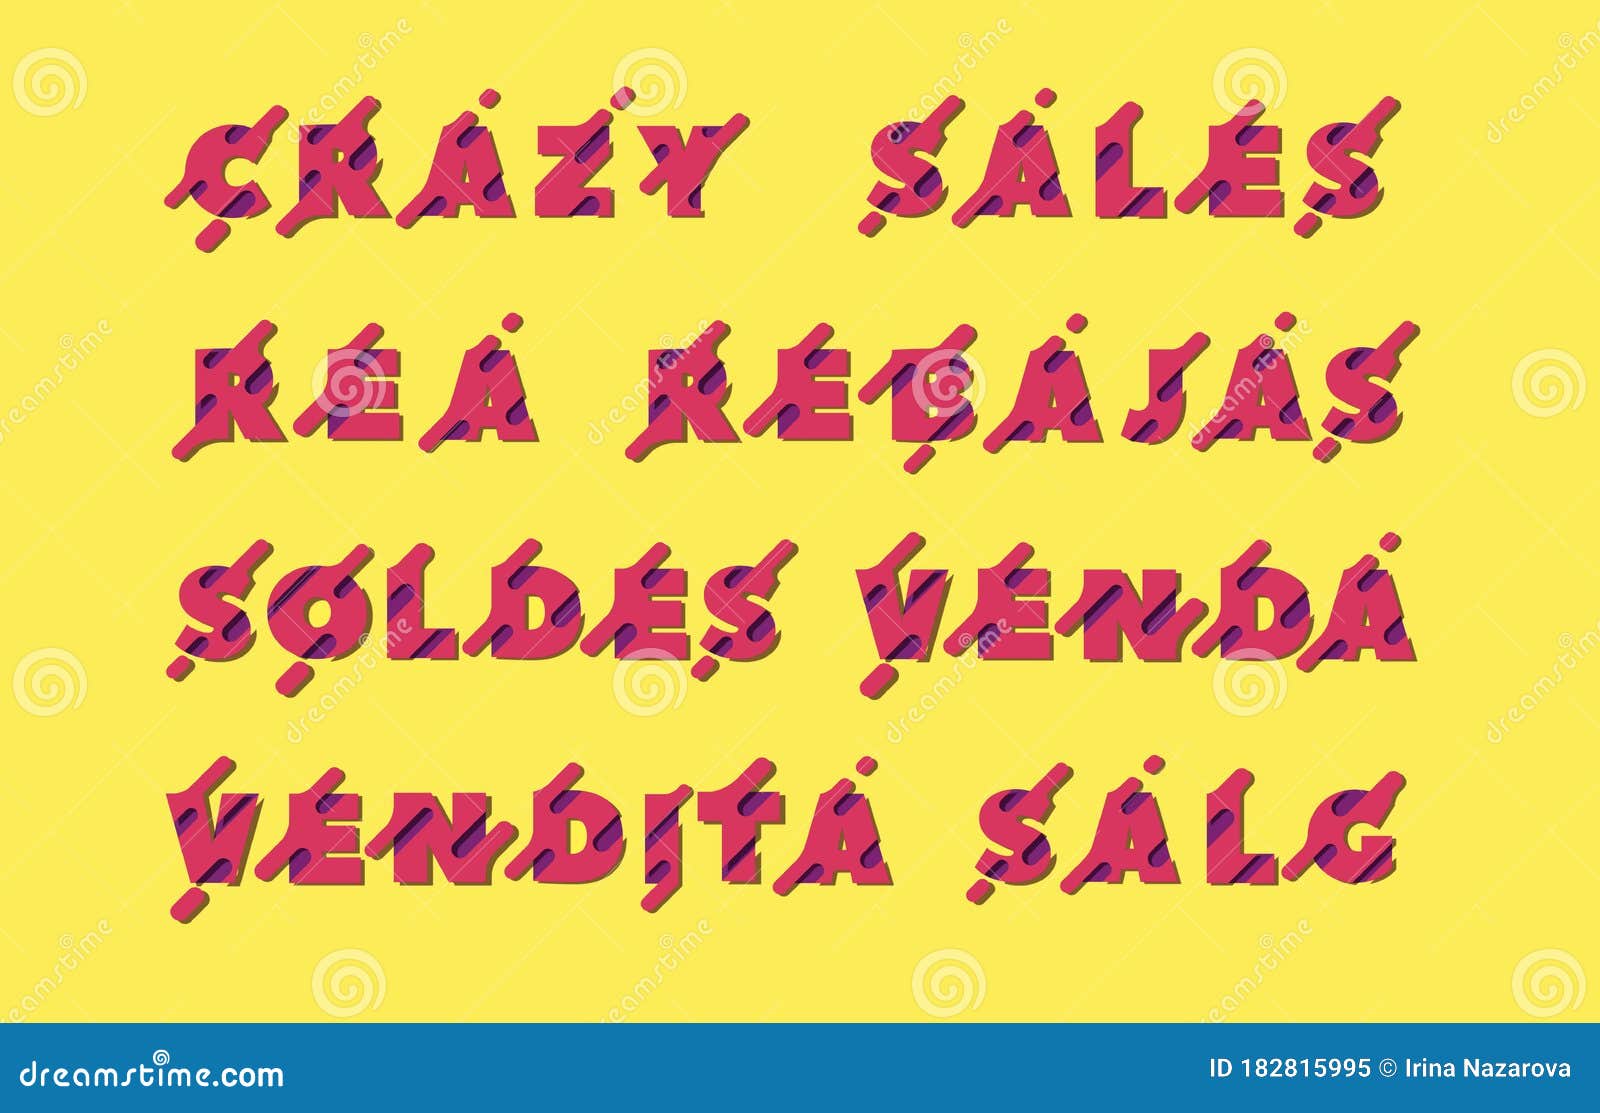 a set of words `sales`, `rea`, `rebajas`, `soldes`, `venda`, `vendita`, `salg` in the original font in the paper cut style for ads